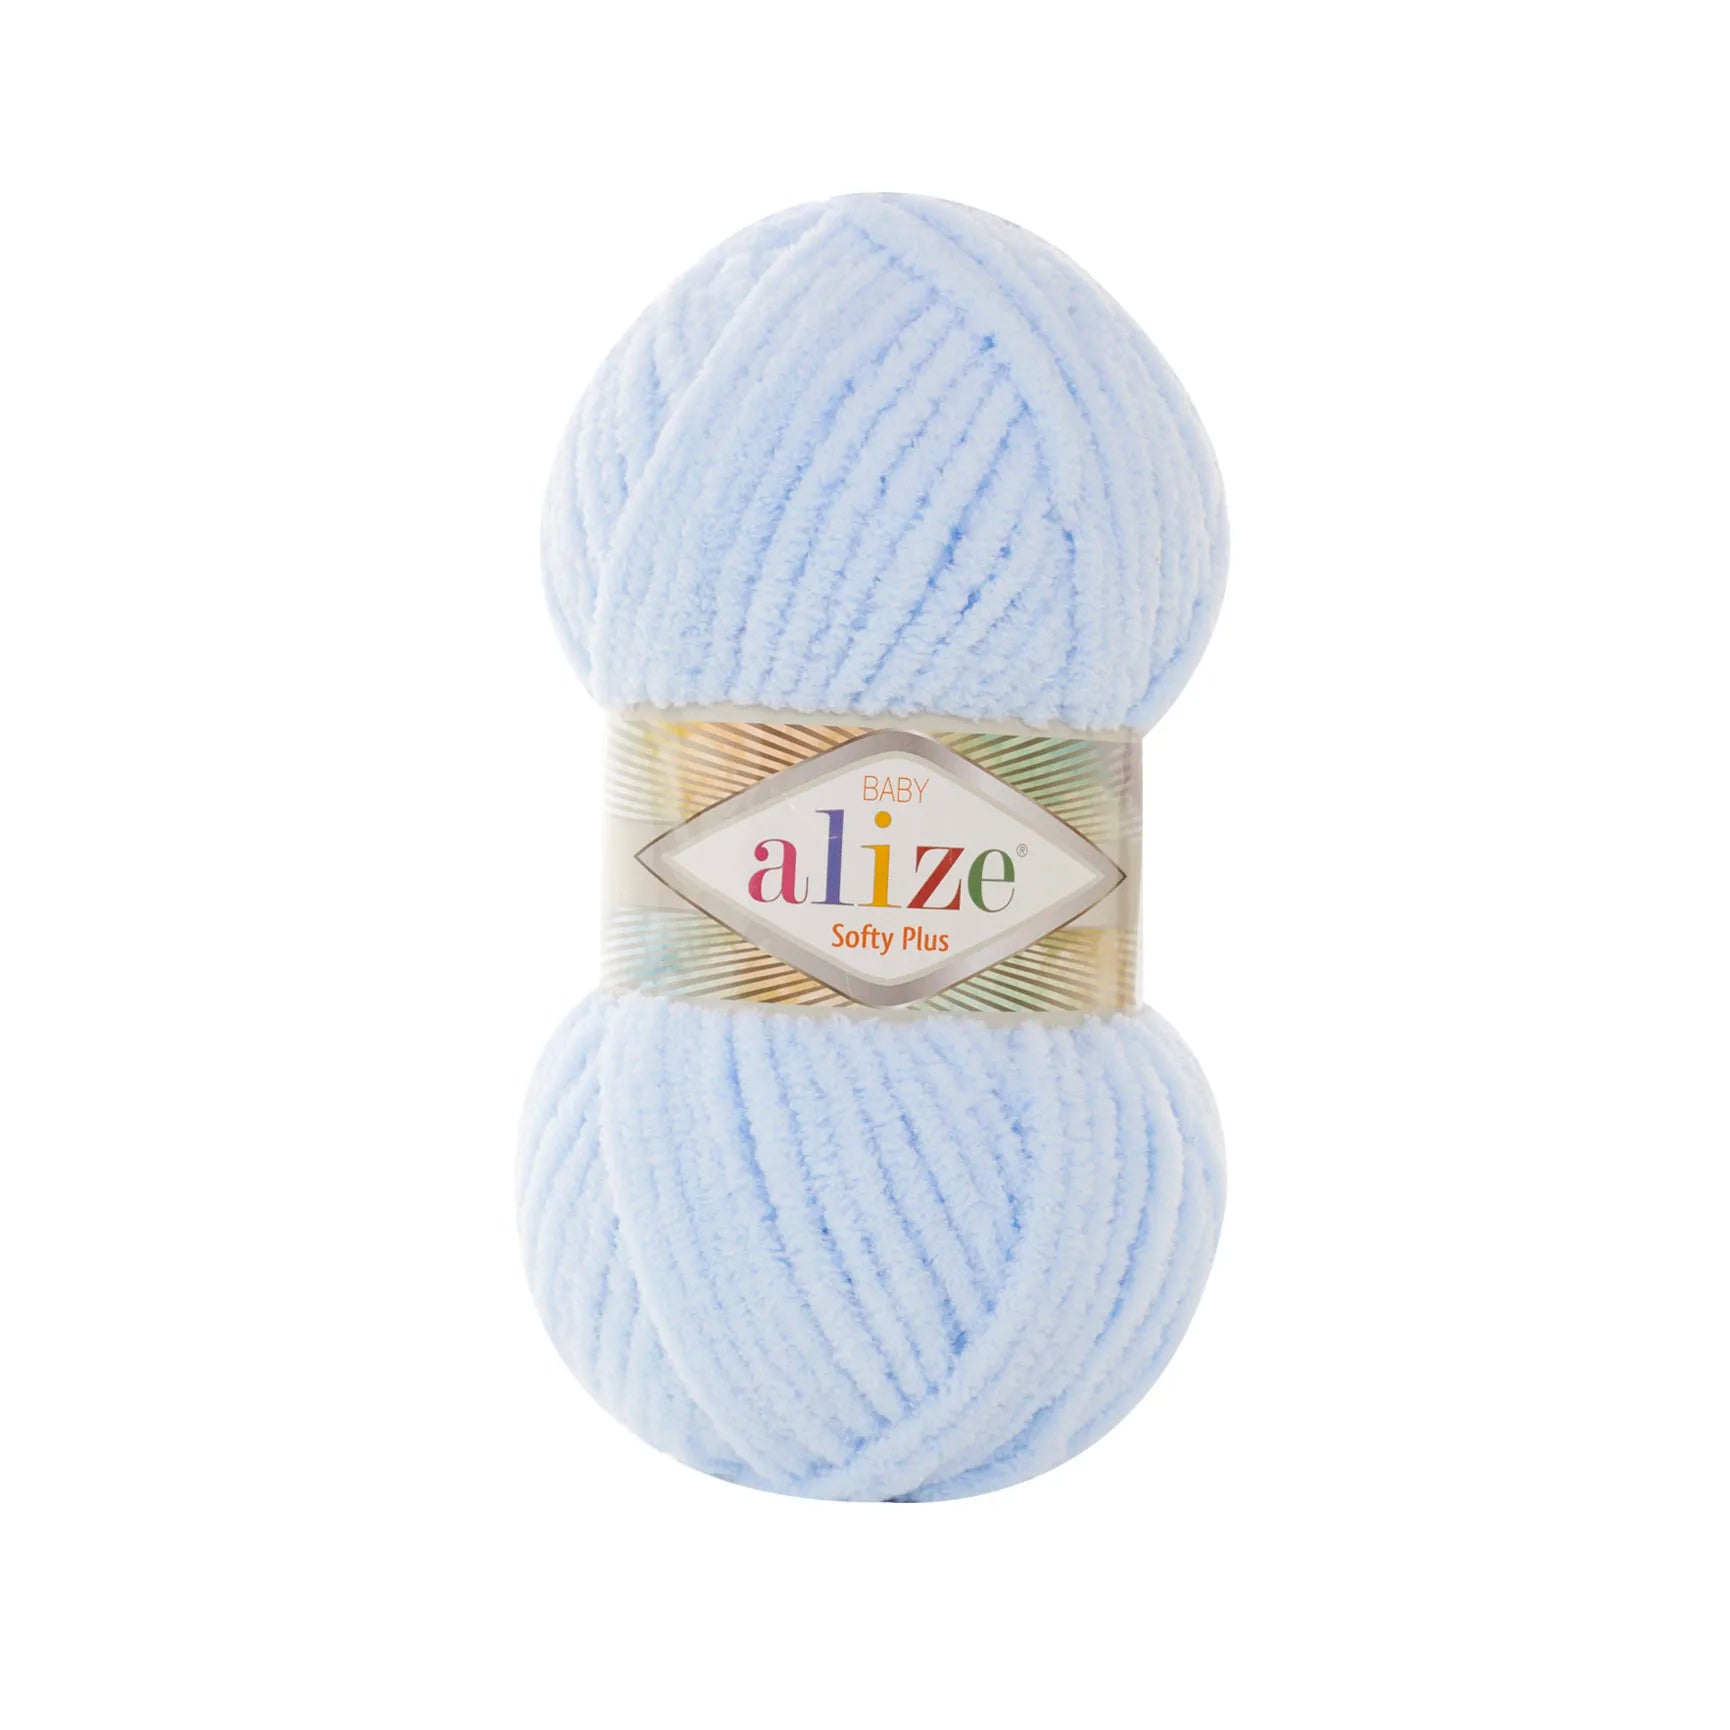 Alize Softy Plus Yarn Hobby Shopy Turkish Store Shop Hand Knitting Yarn 183